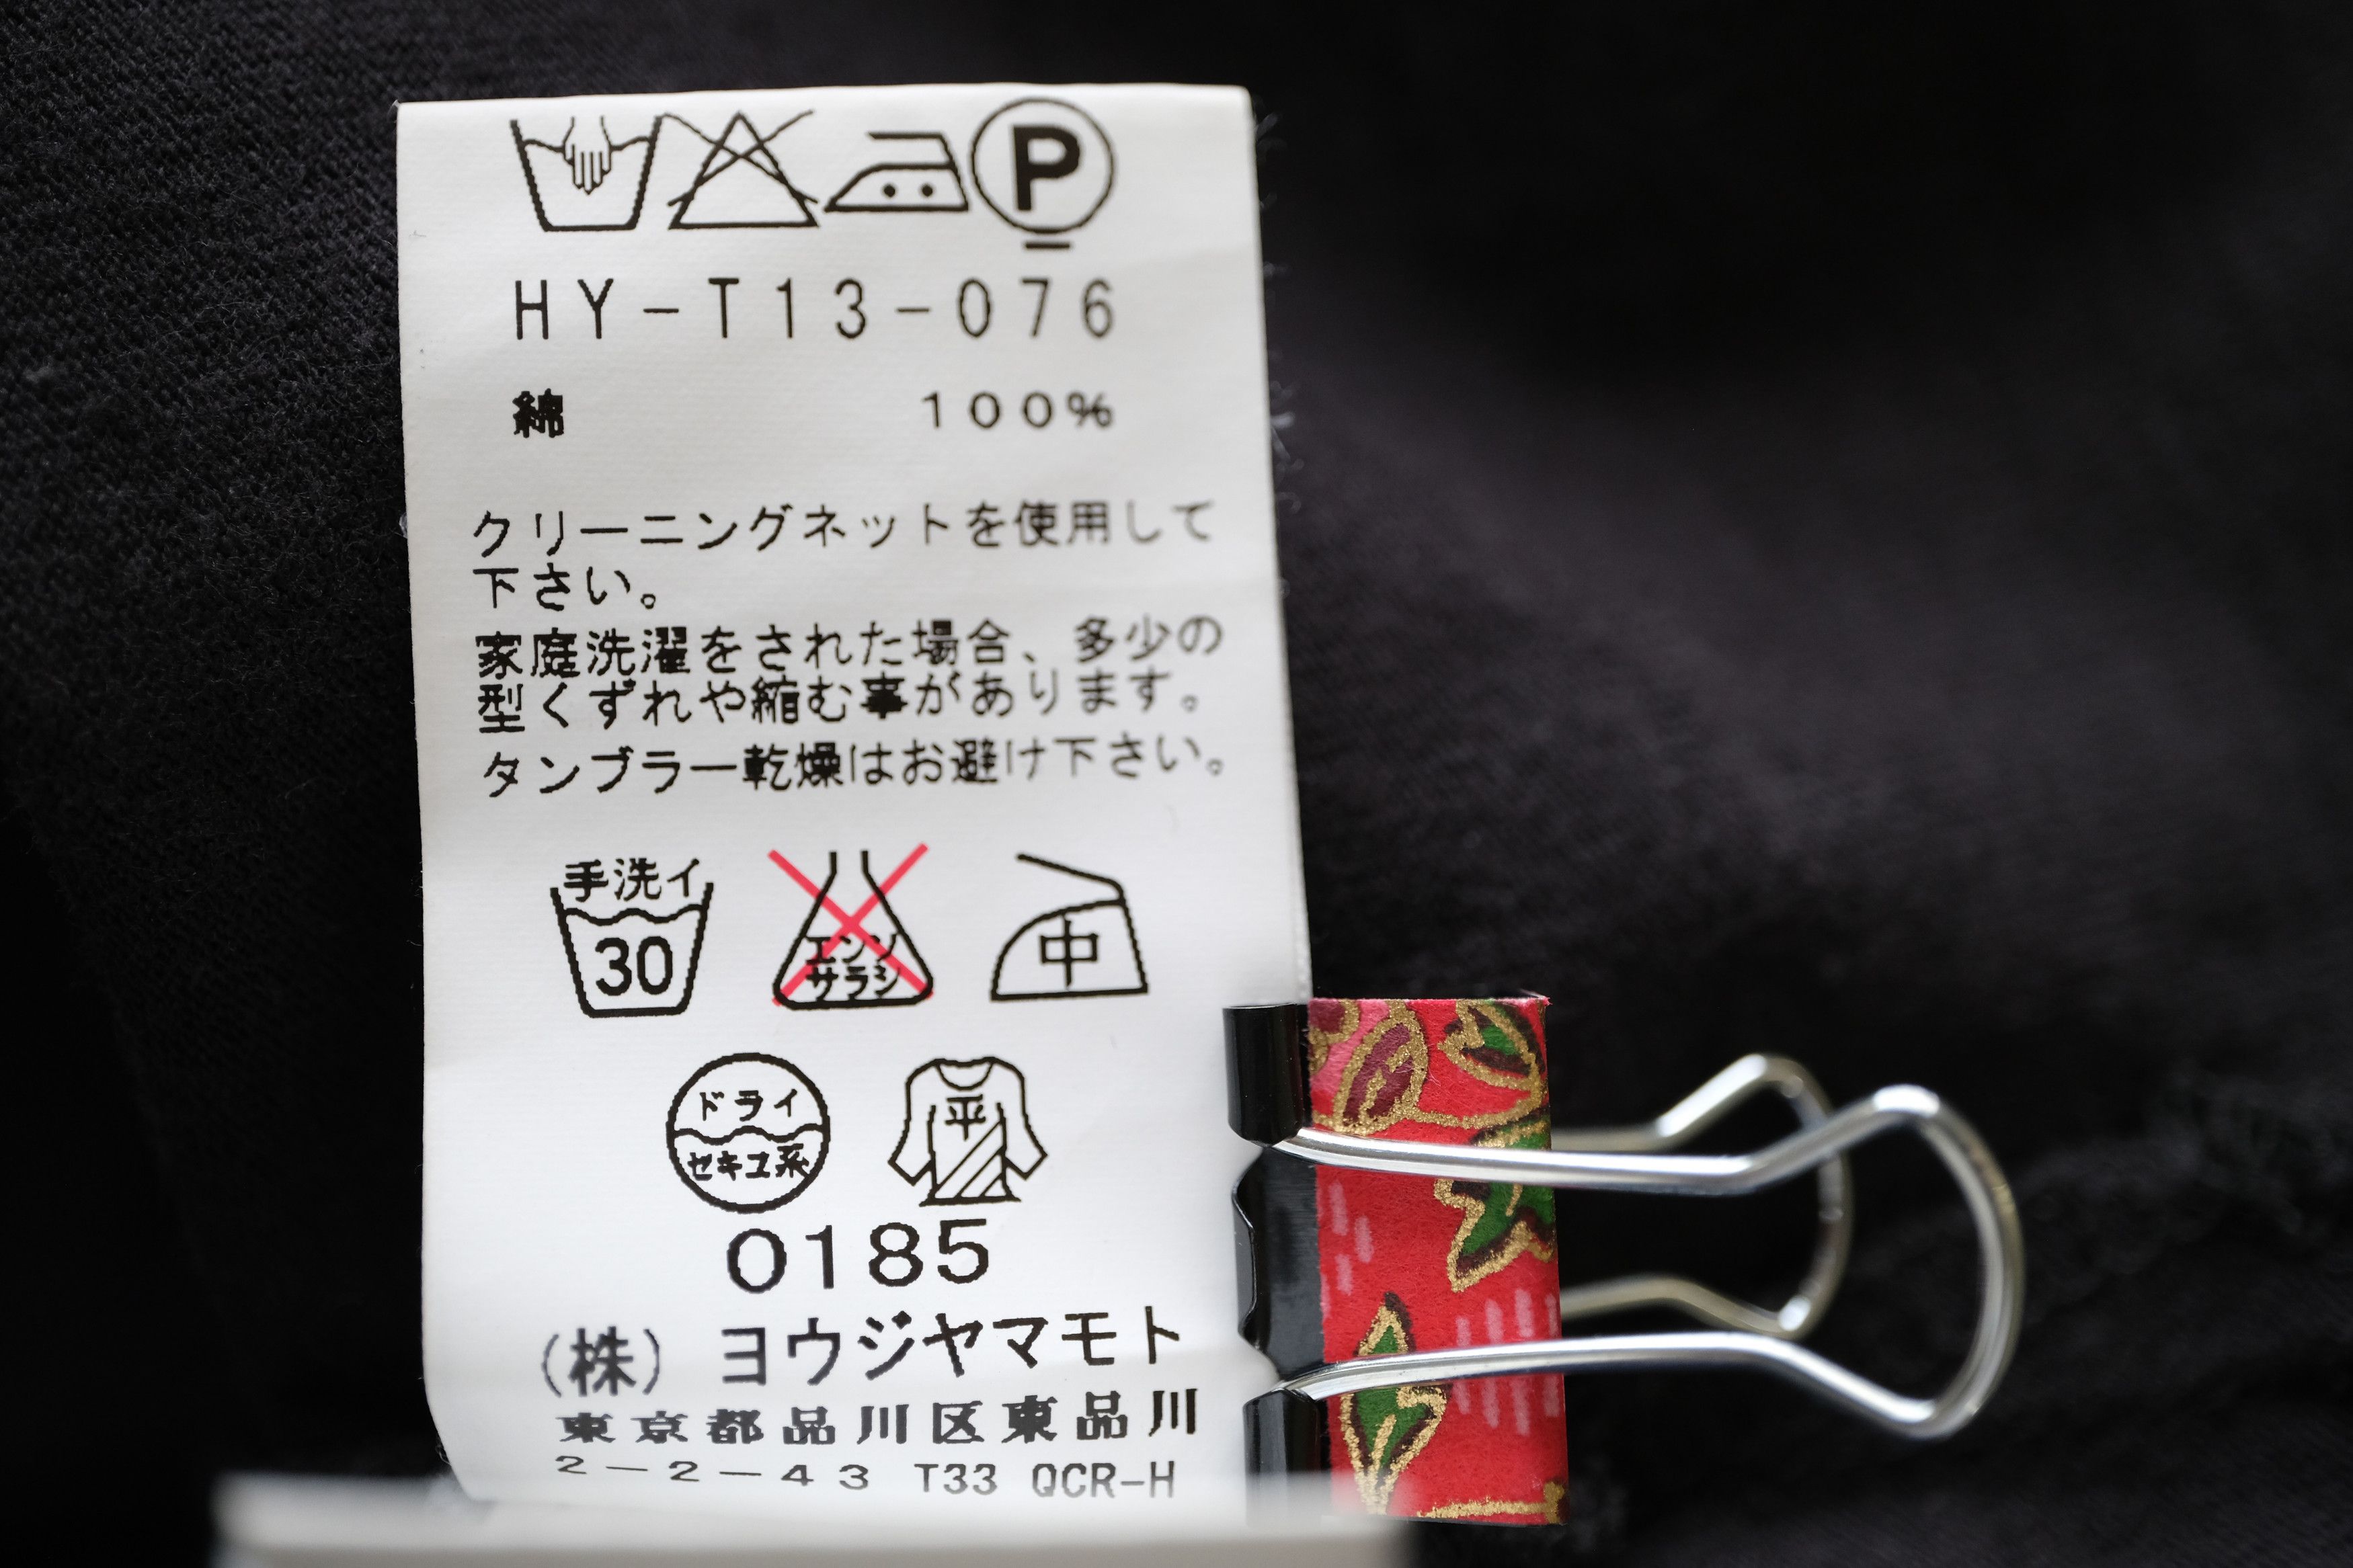 🎐 YYPH AW15-Runway Distressed Cut & Sewn Top with Raw-Hem - 11